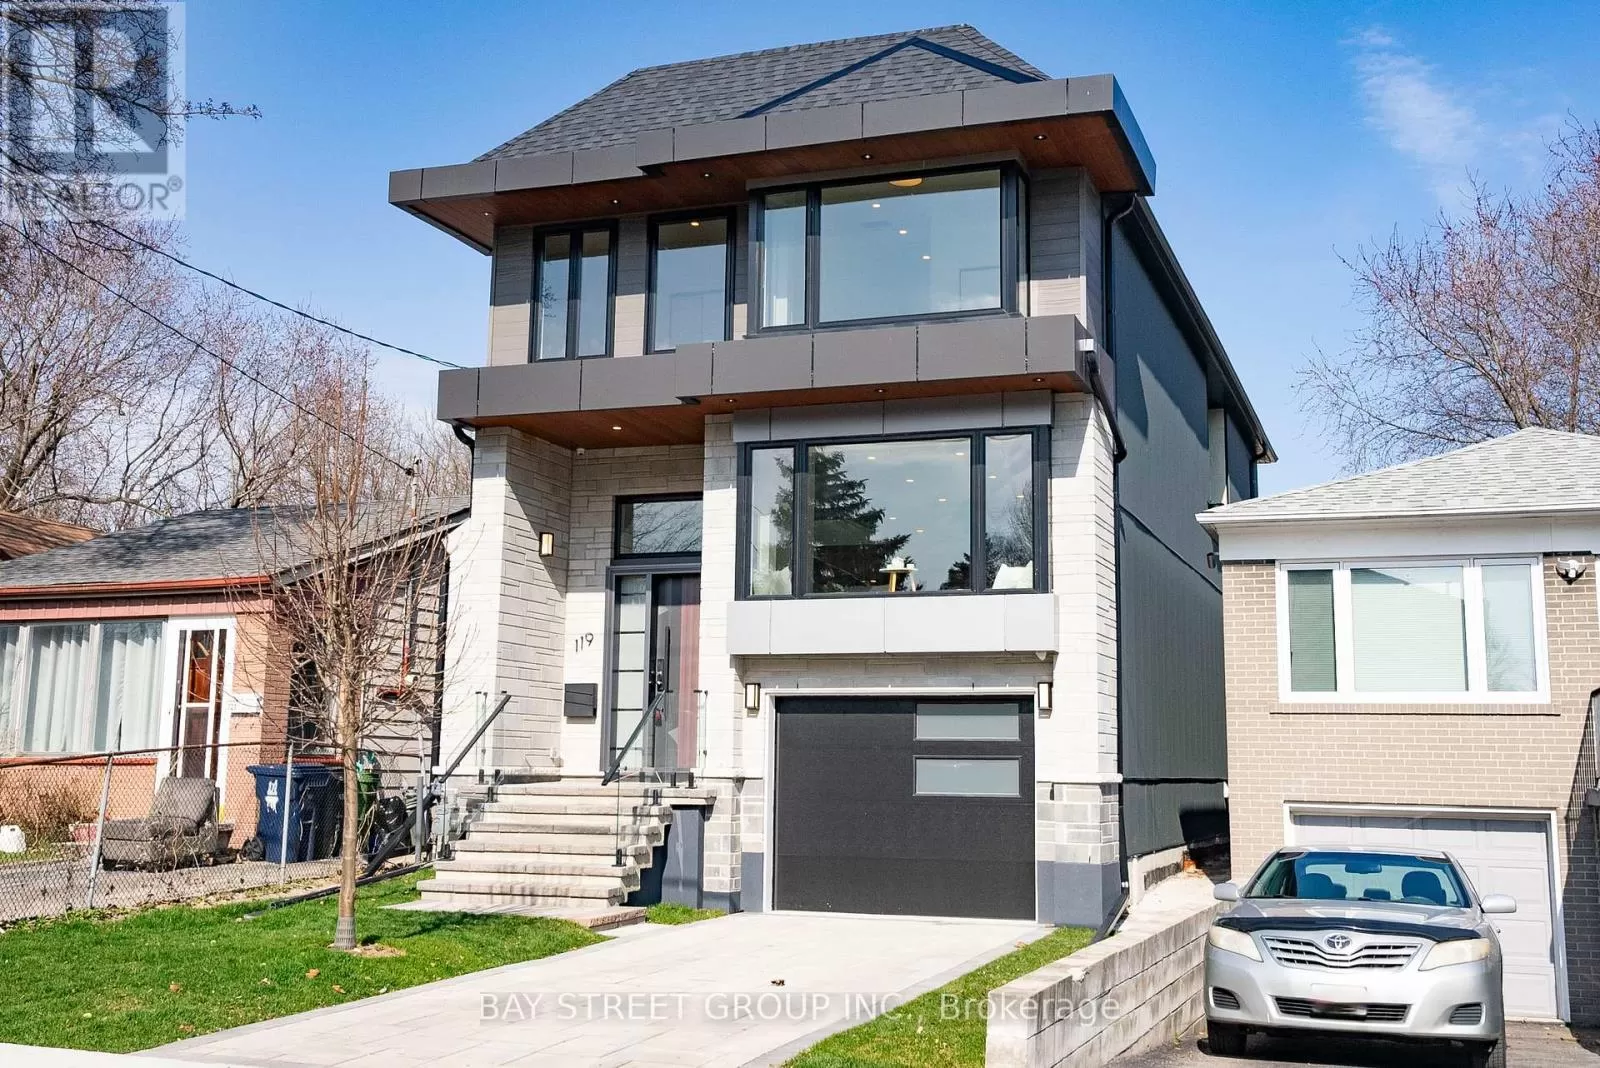 House for rent: 119 Preston Street, Toronto, Ontario M1N 3N4